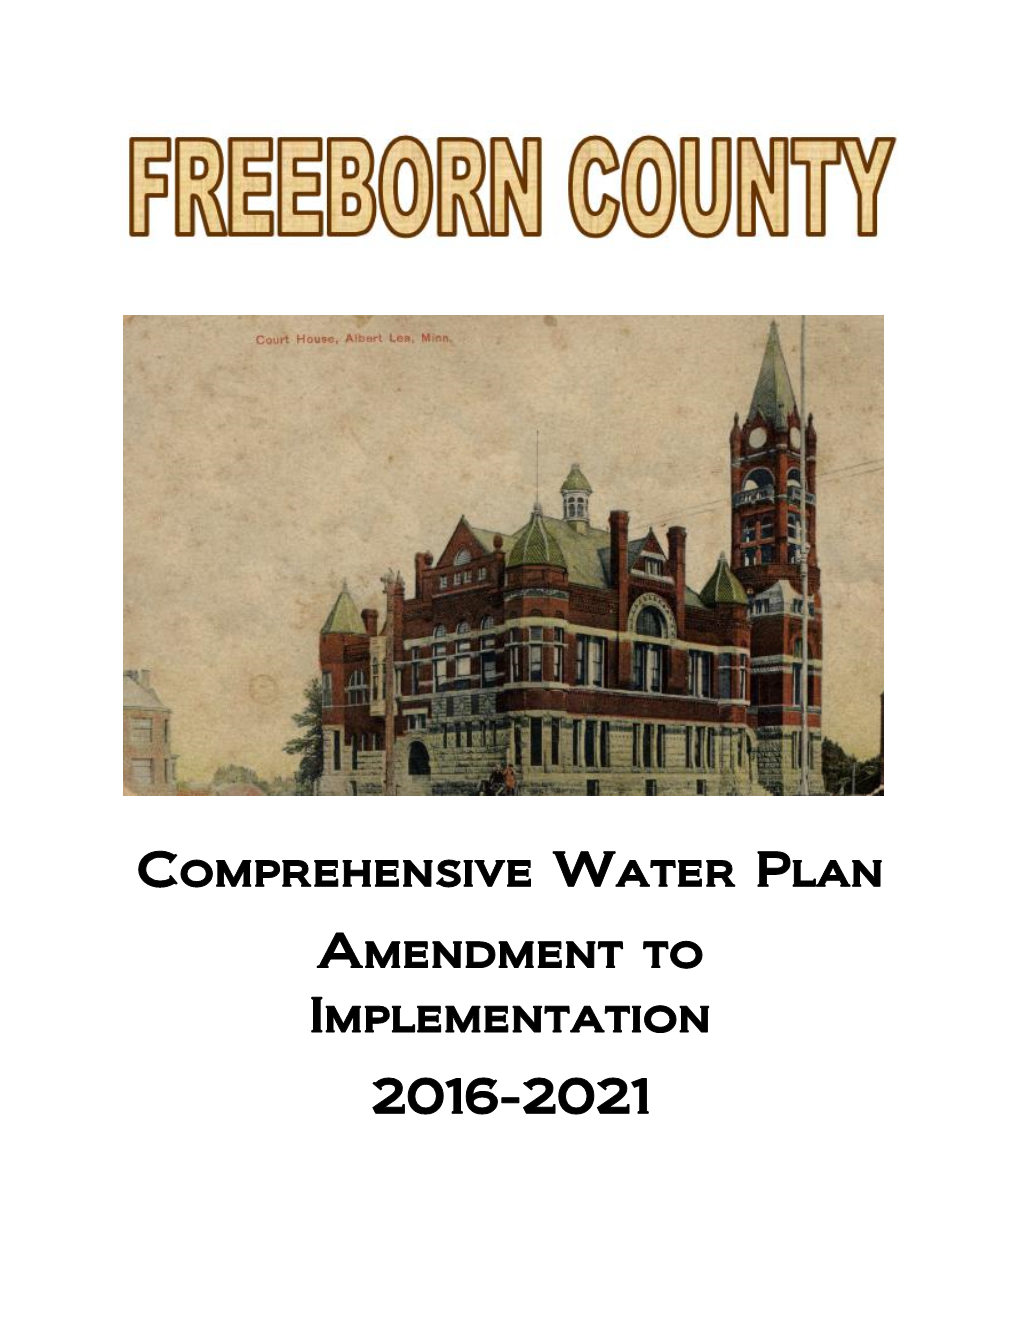 Freeborn County Comprehensive Water Plan 2016-2021